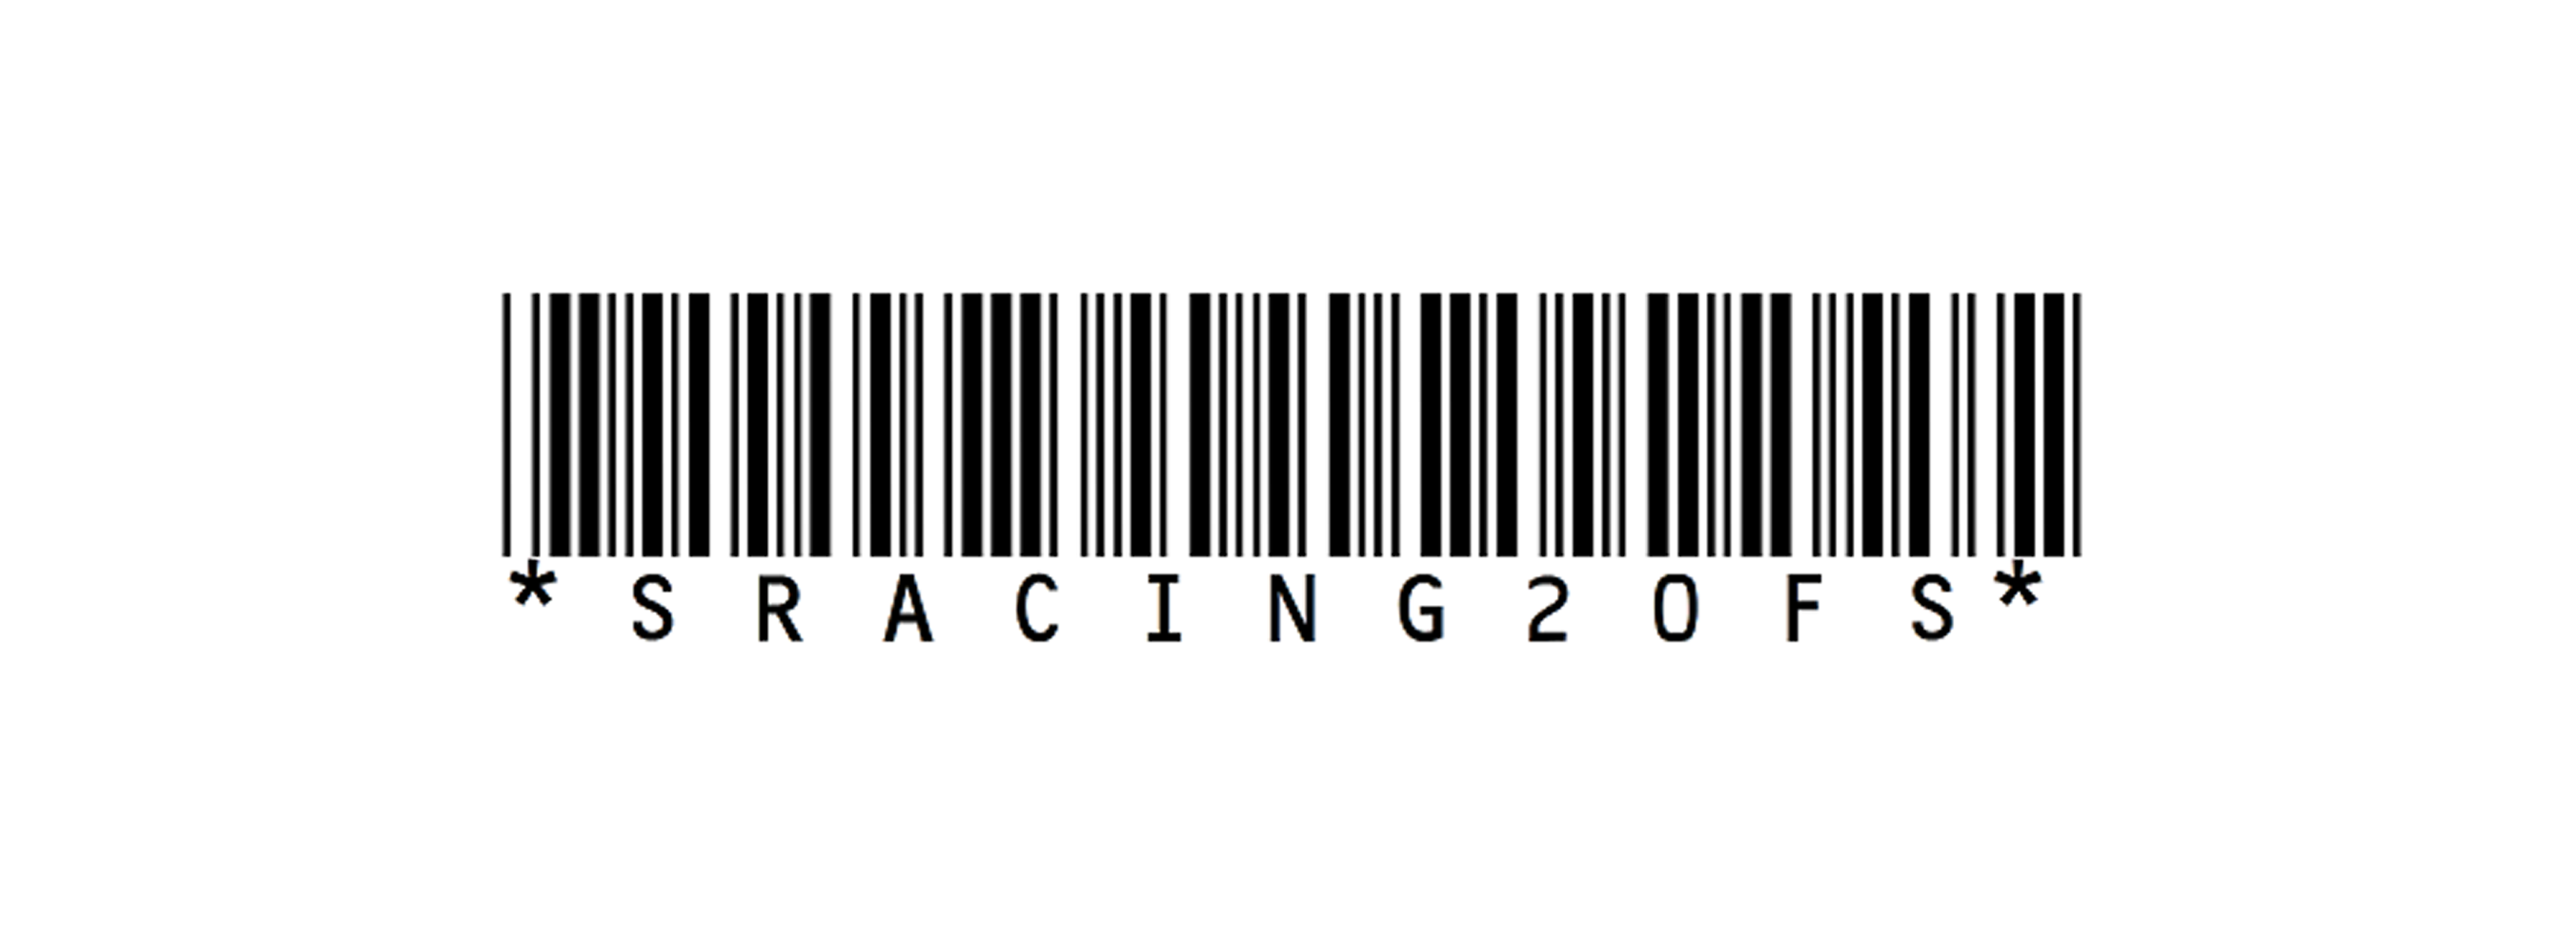 racing barcode